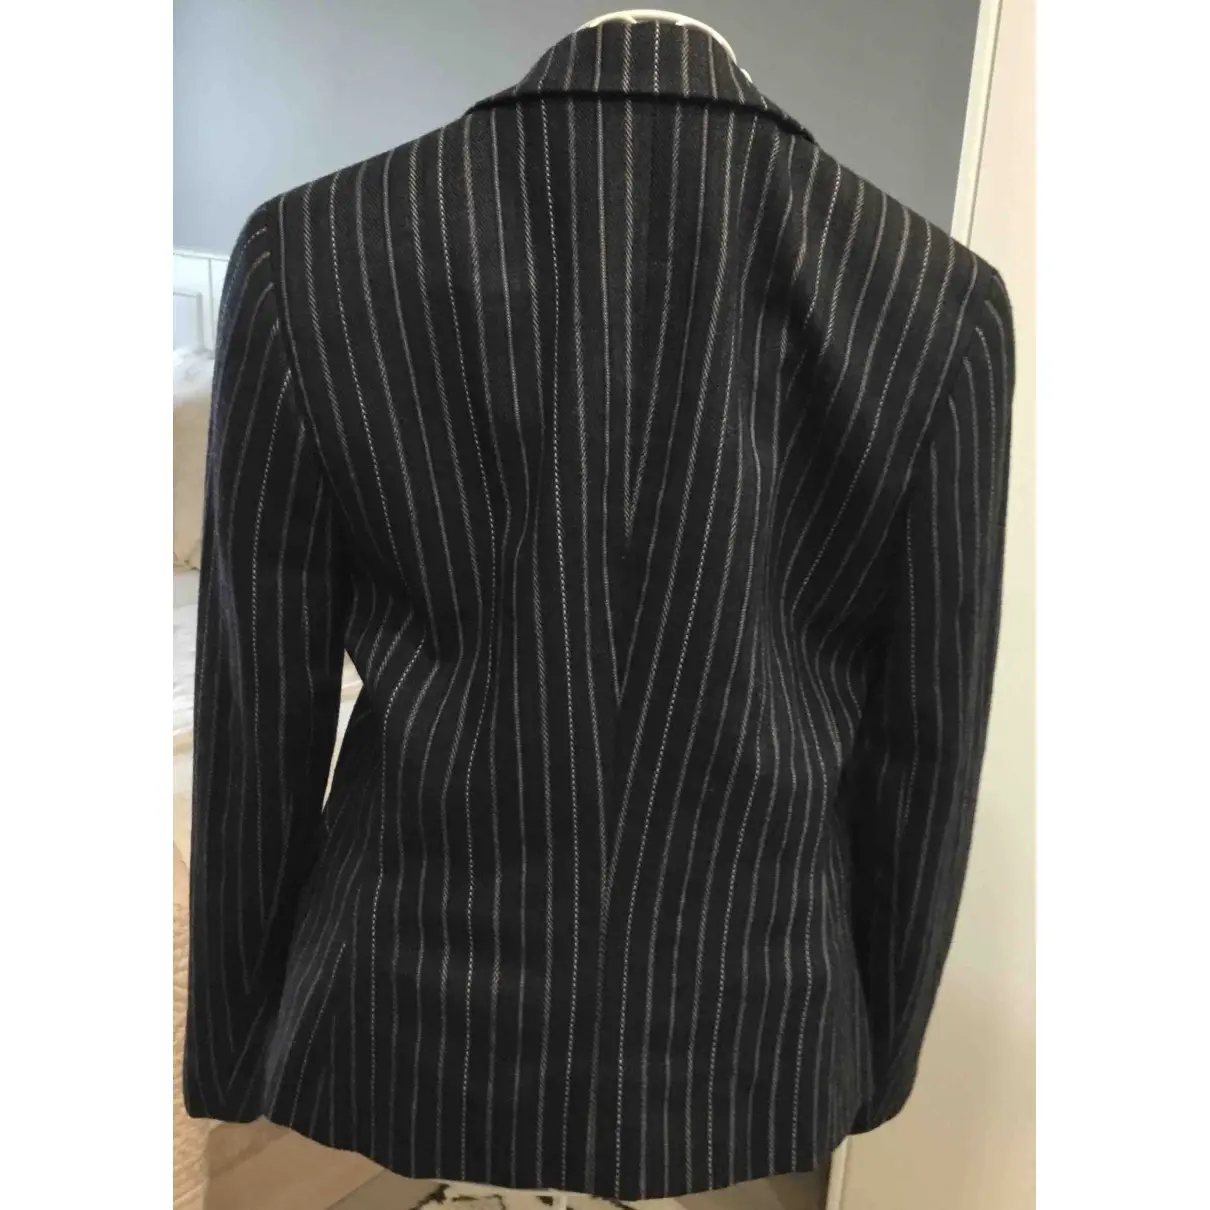 Buy Massimo Dutti Wool suit jacket online